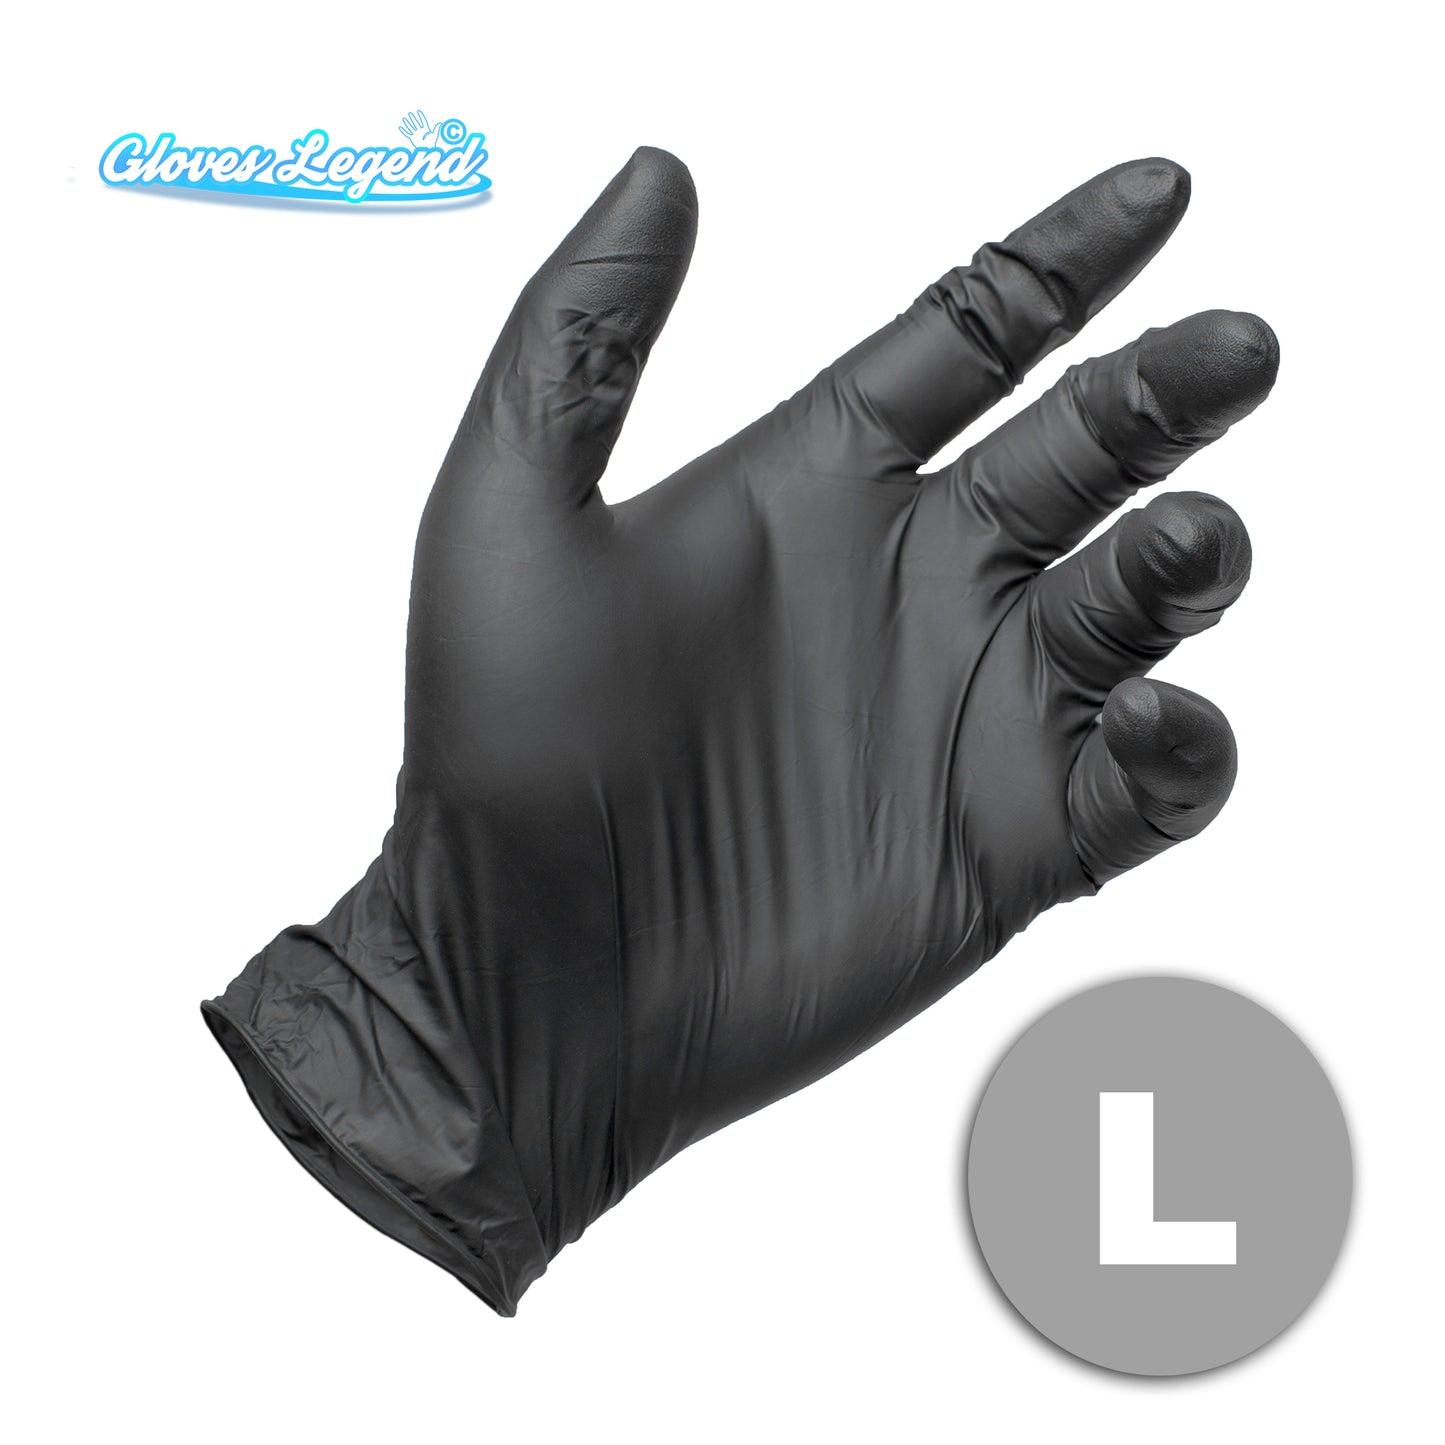 One Box (100 Gloves) - Size Large - Black Nitrile Powder Free Medical Exam Tattoos Piercing Gloves